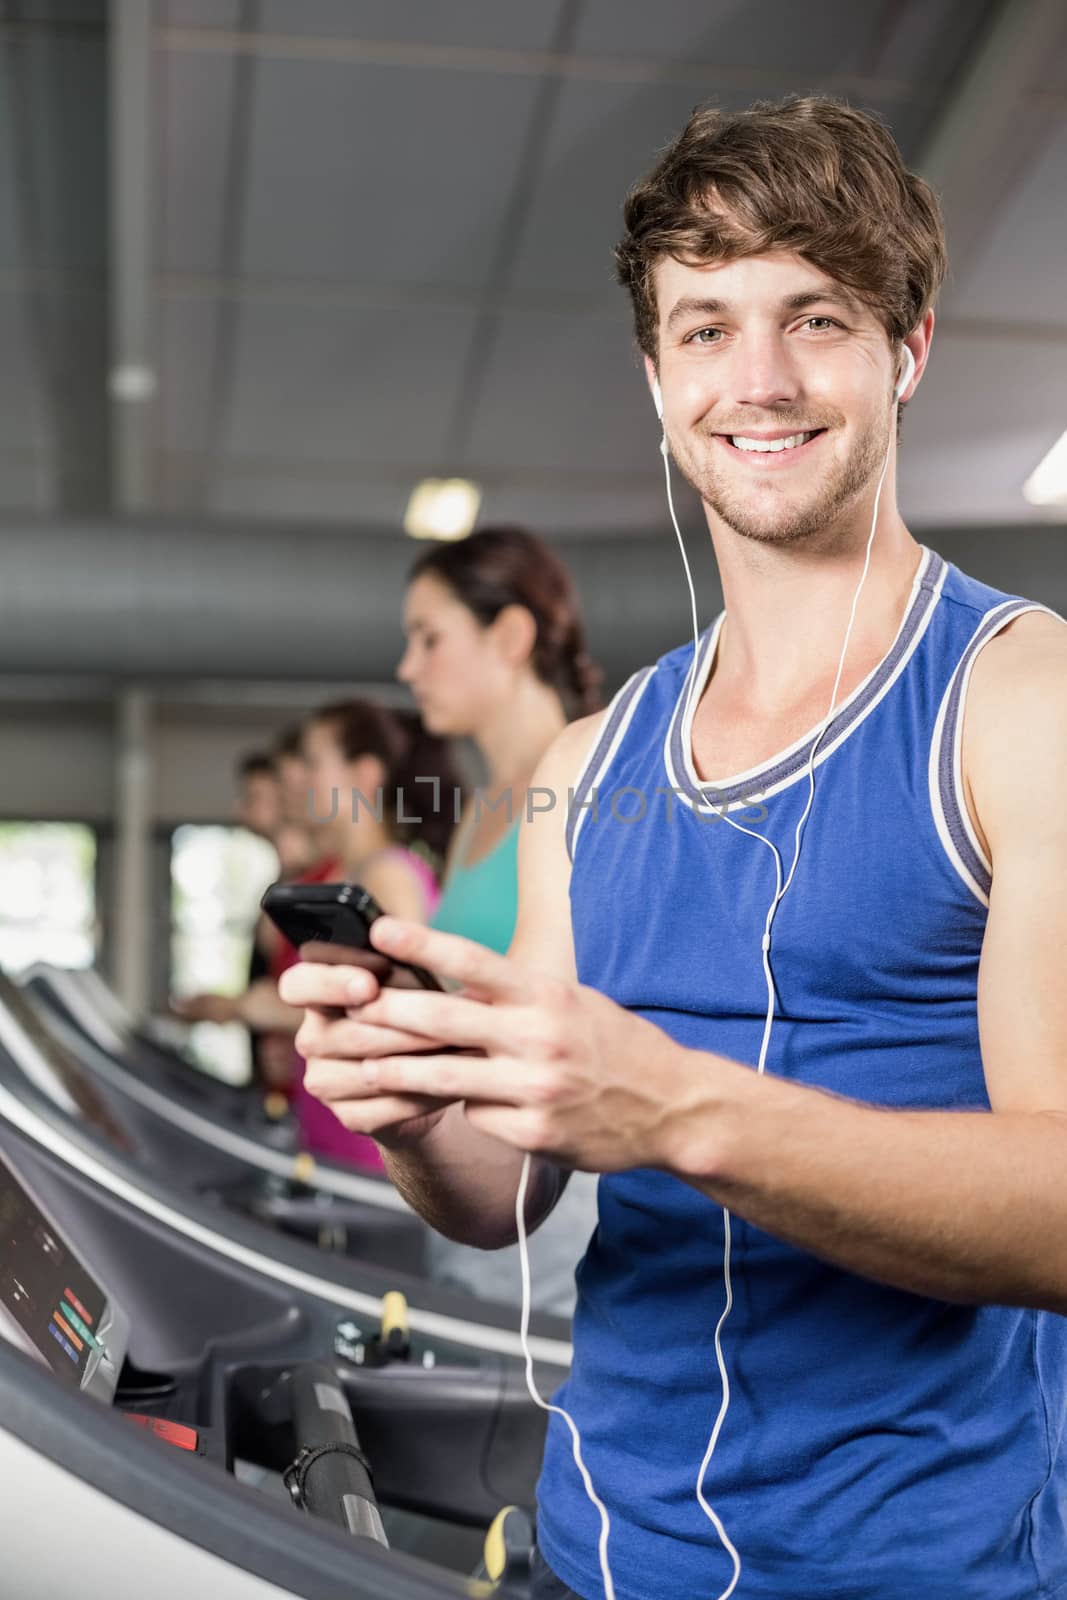 Smiling muscular man on treadmill listening to music by Wavebreakmedia